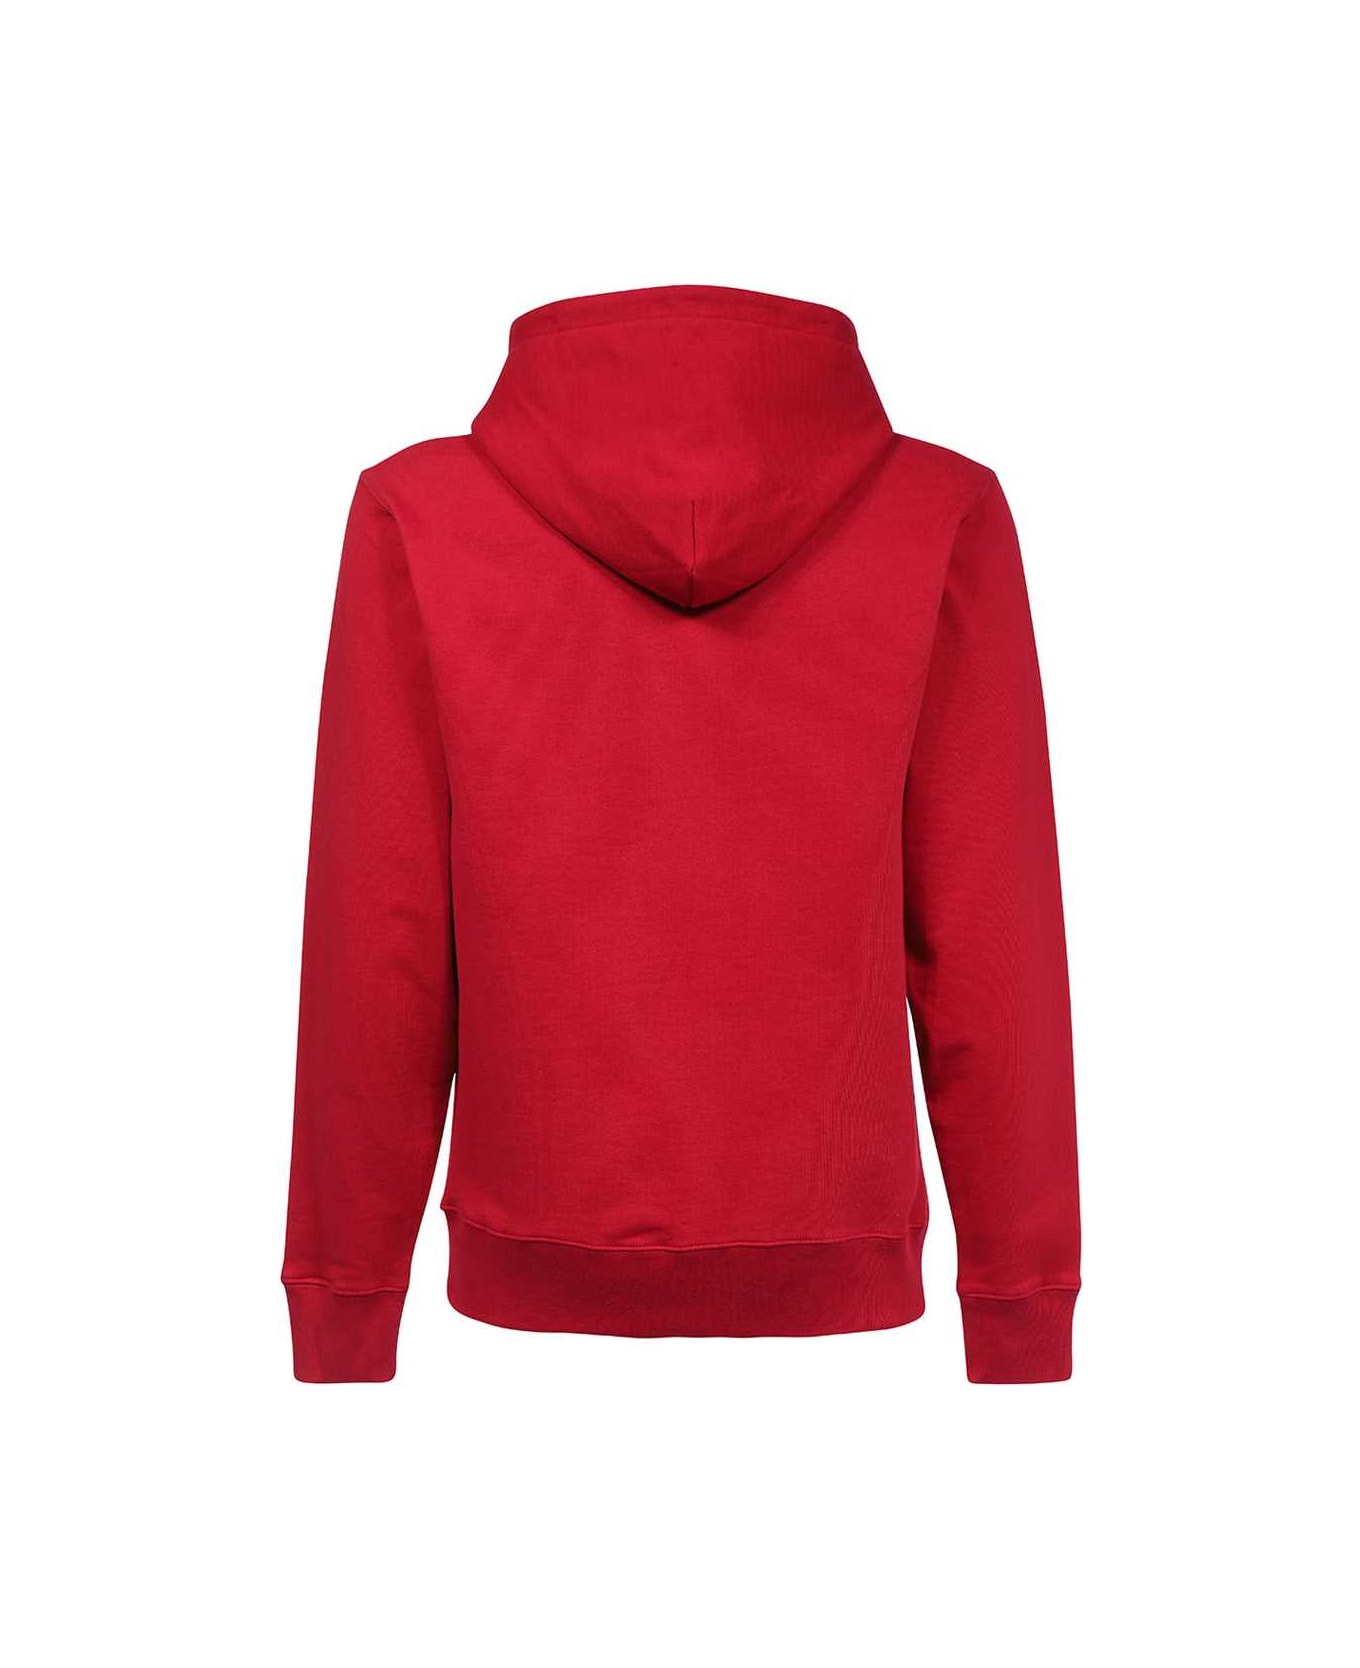 Billionaire Boys Club Hooded Sweatshirt - red フリース